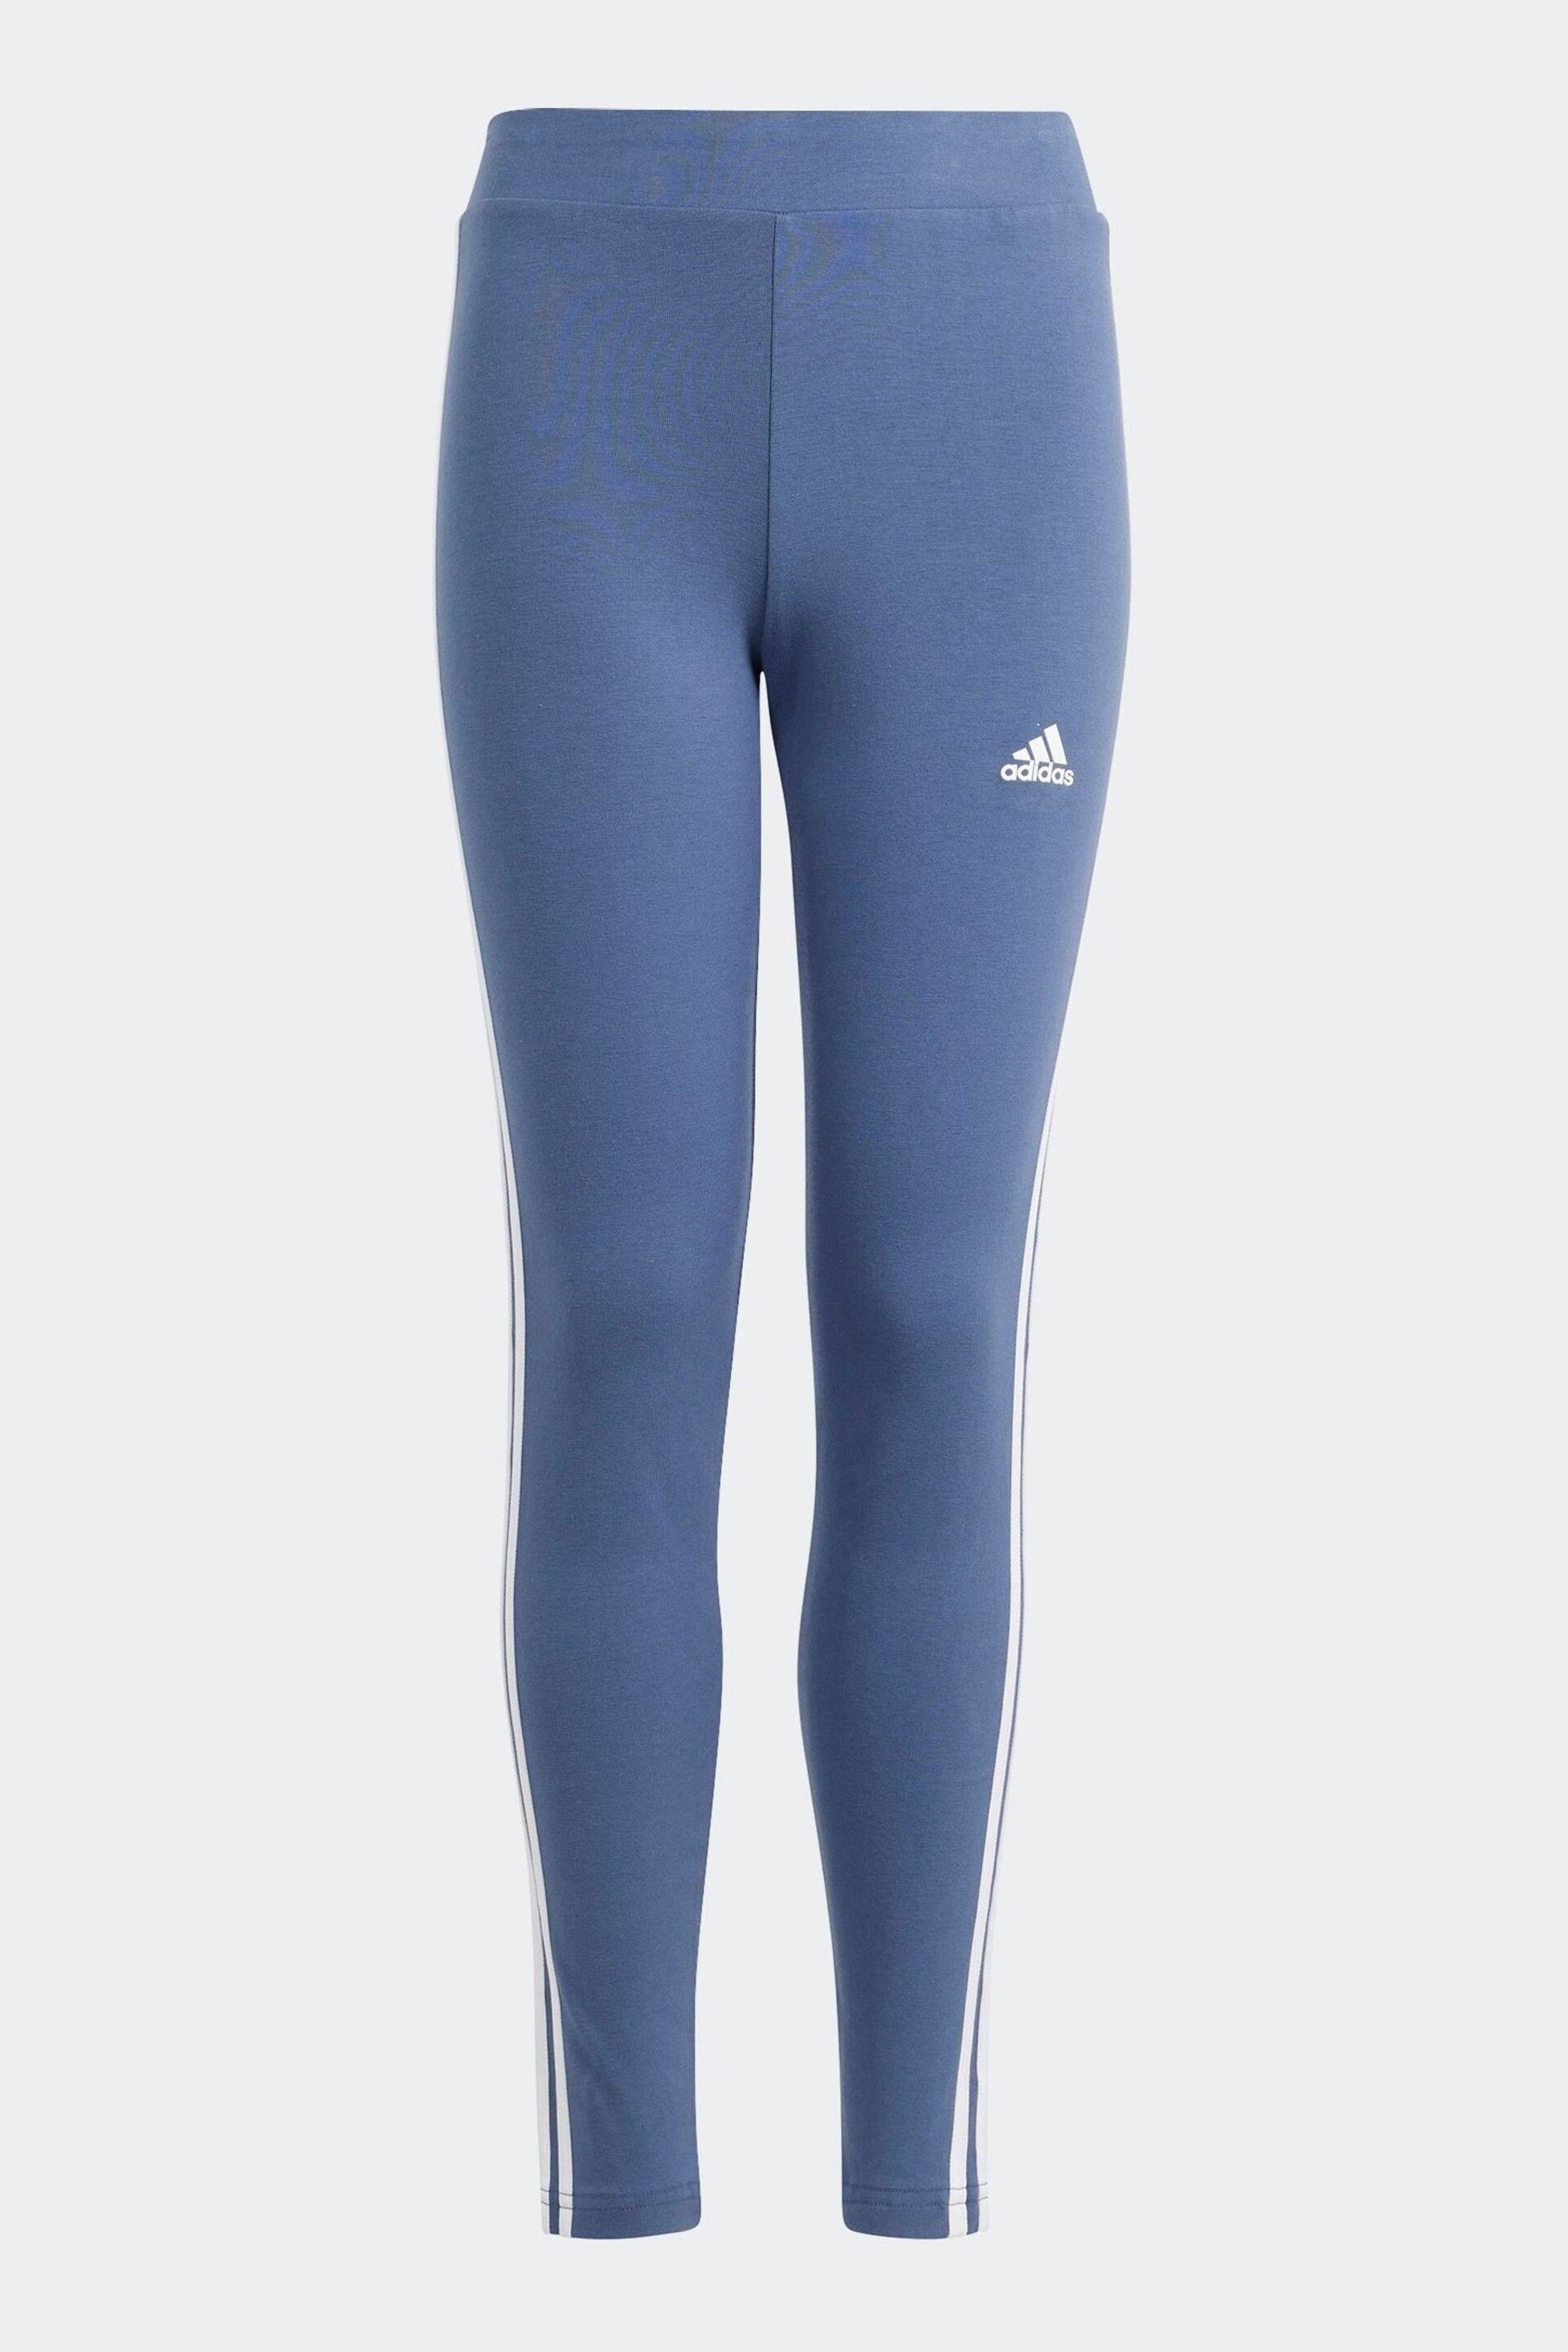 adidas Blue Sportswear Essentials 3 Stripes Cotton Leggings - Image 1 of 5